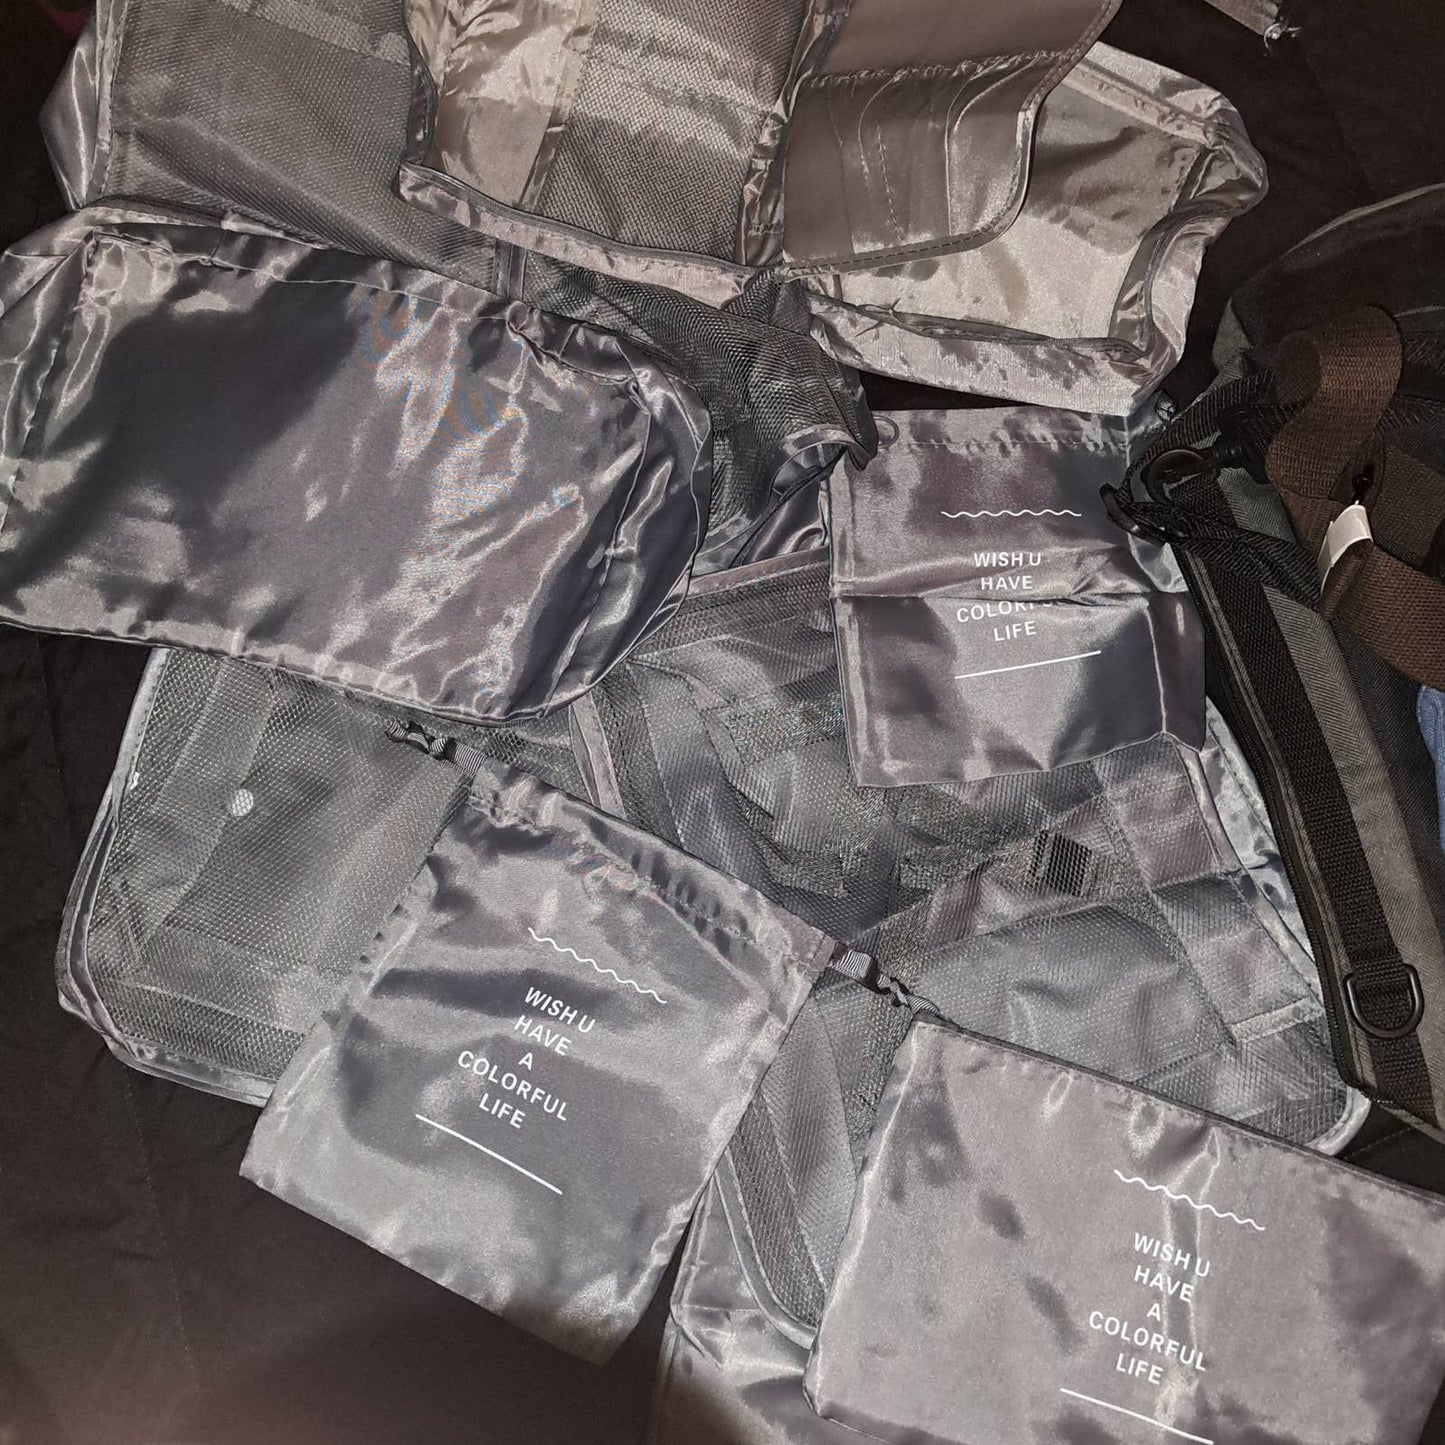 GRAY 10 pc luggage organizer bags various sizes multifunctional set